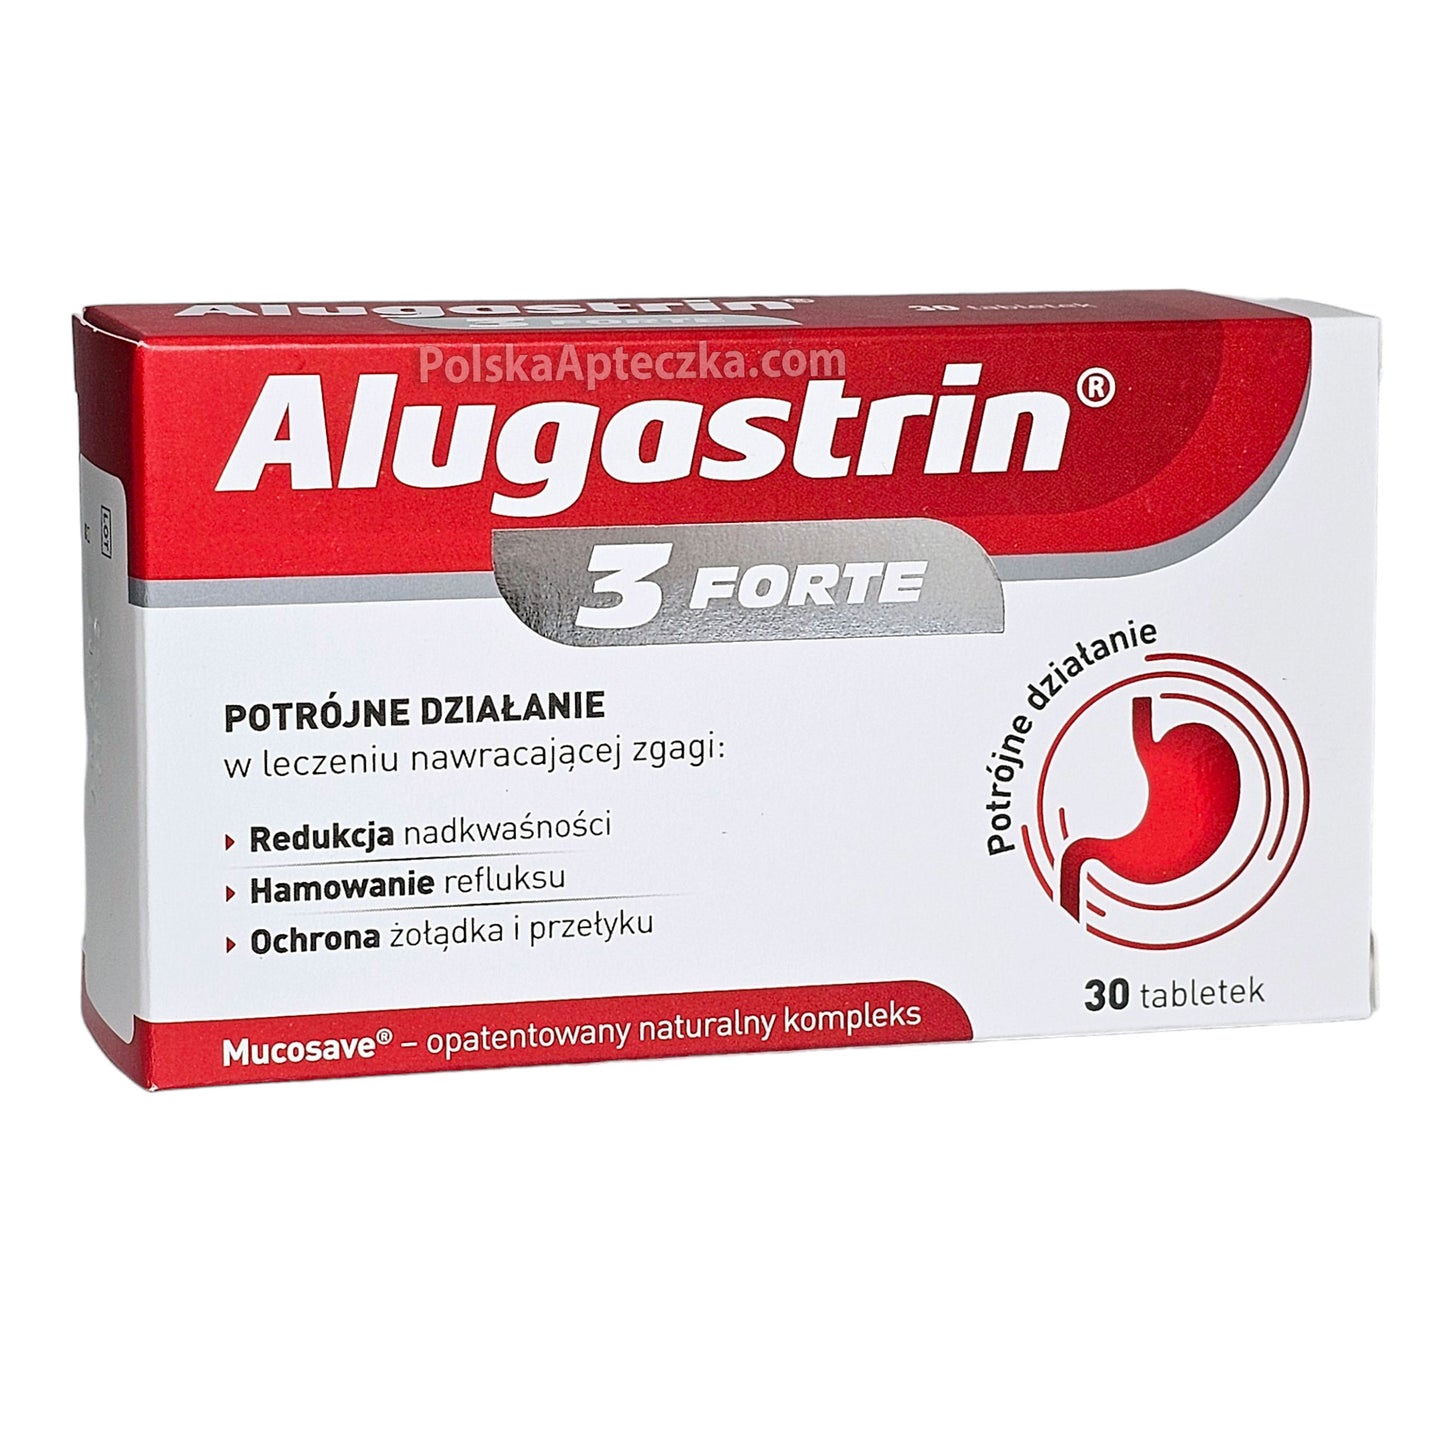 alugastrin 3 forte tablets